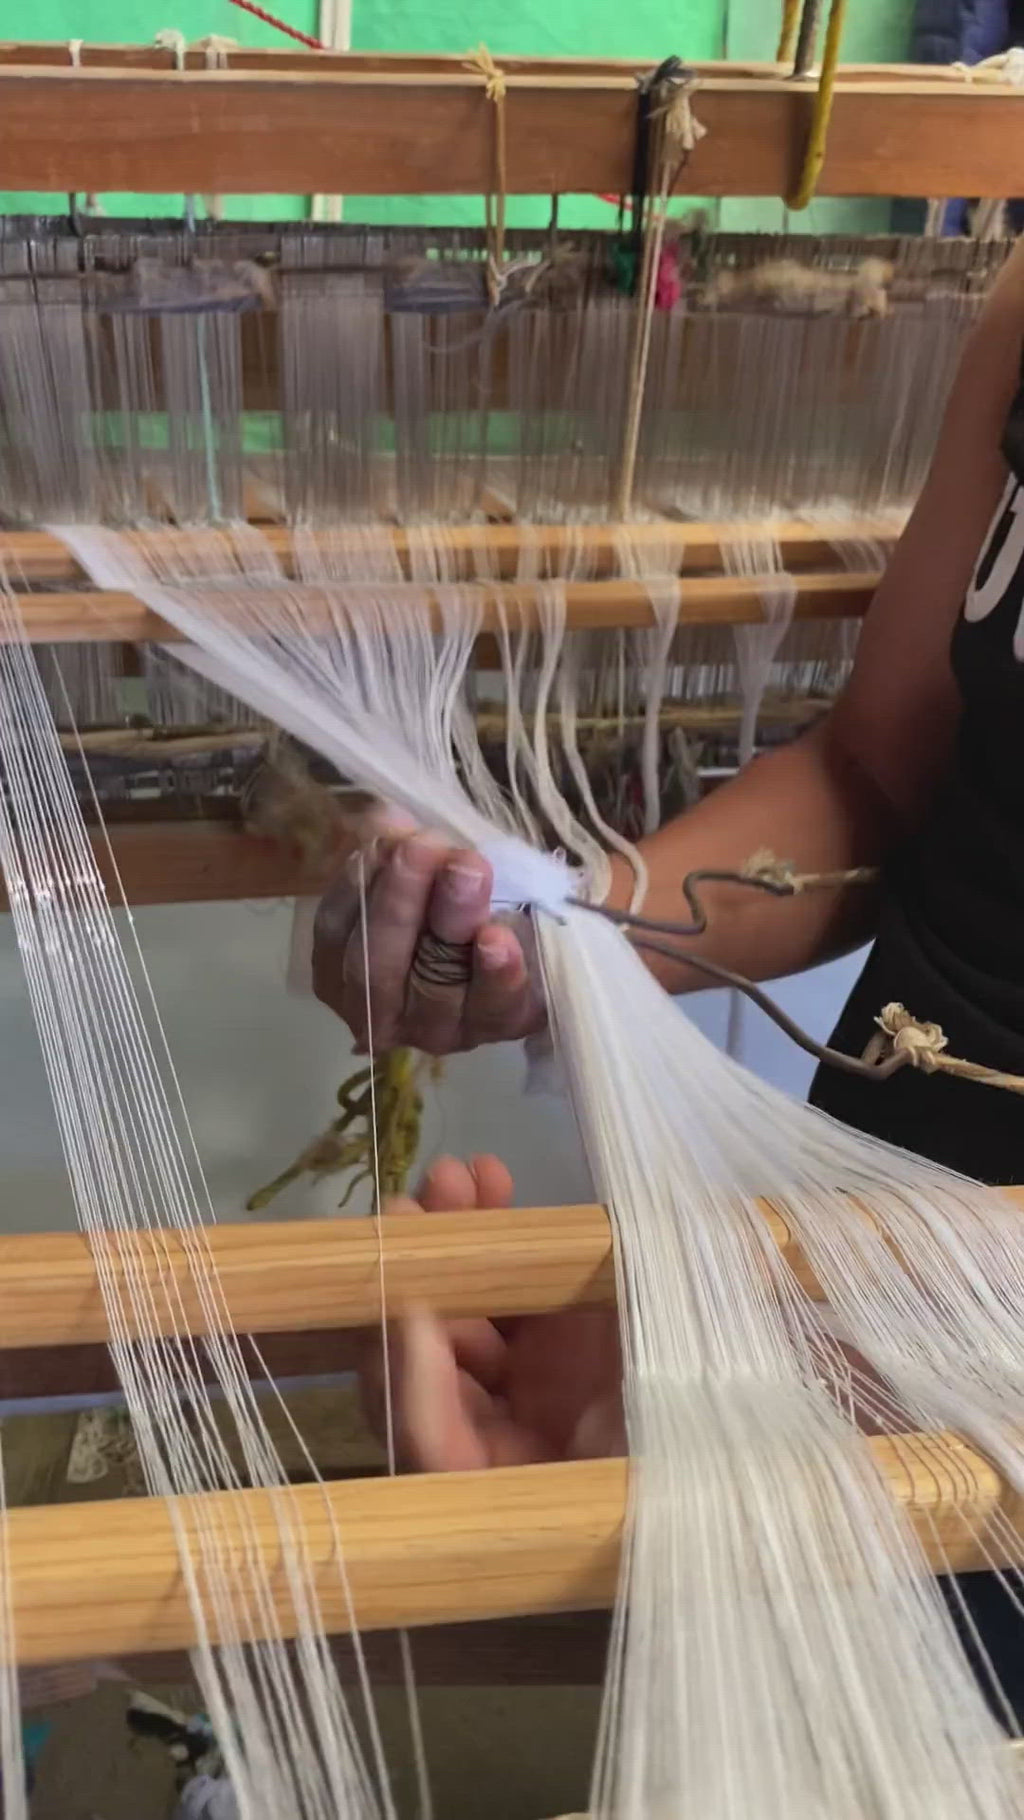 video of artisan partner hand-threading cotton to make CEREMONIA linen napkins